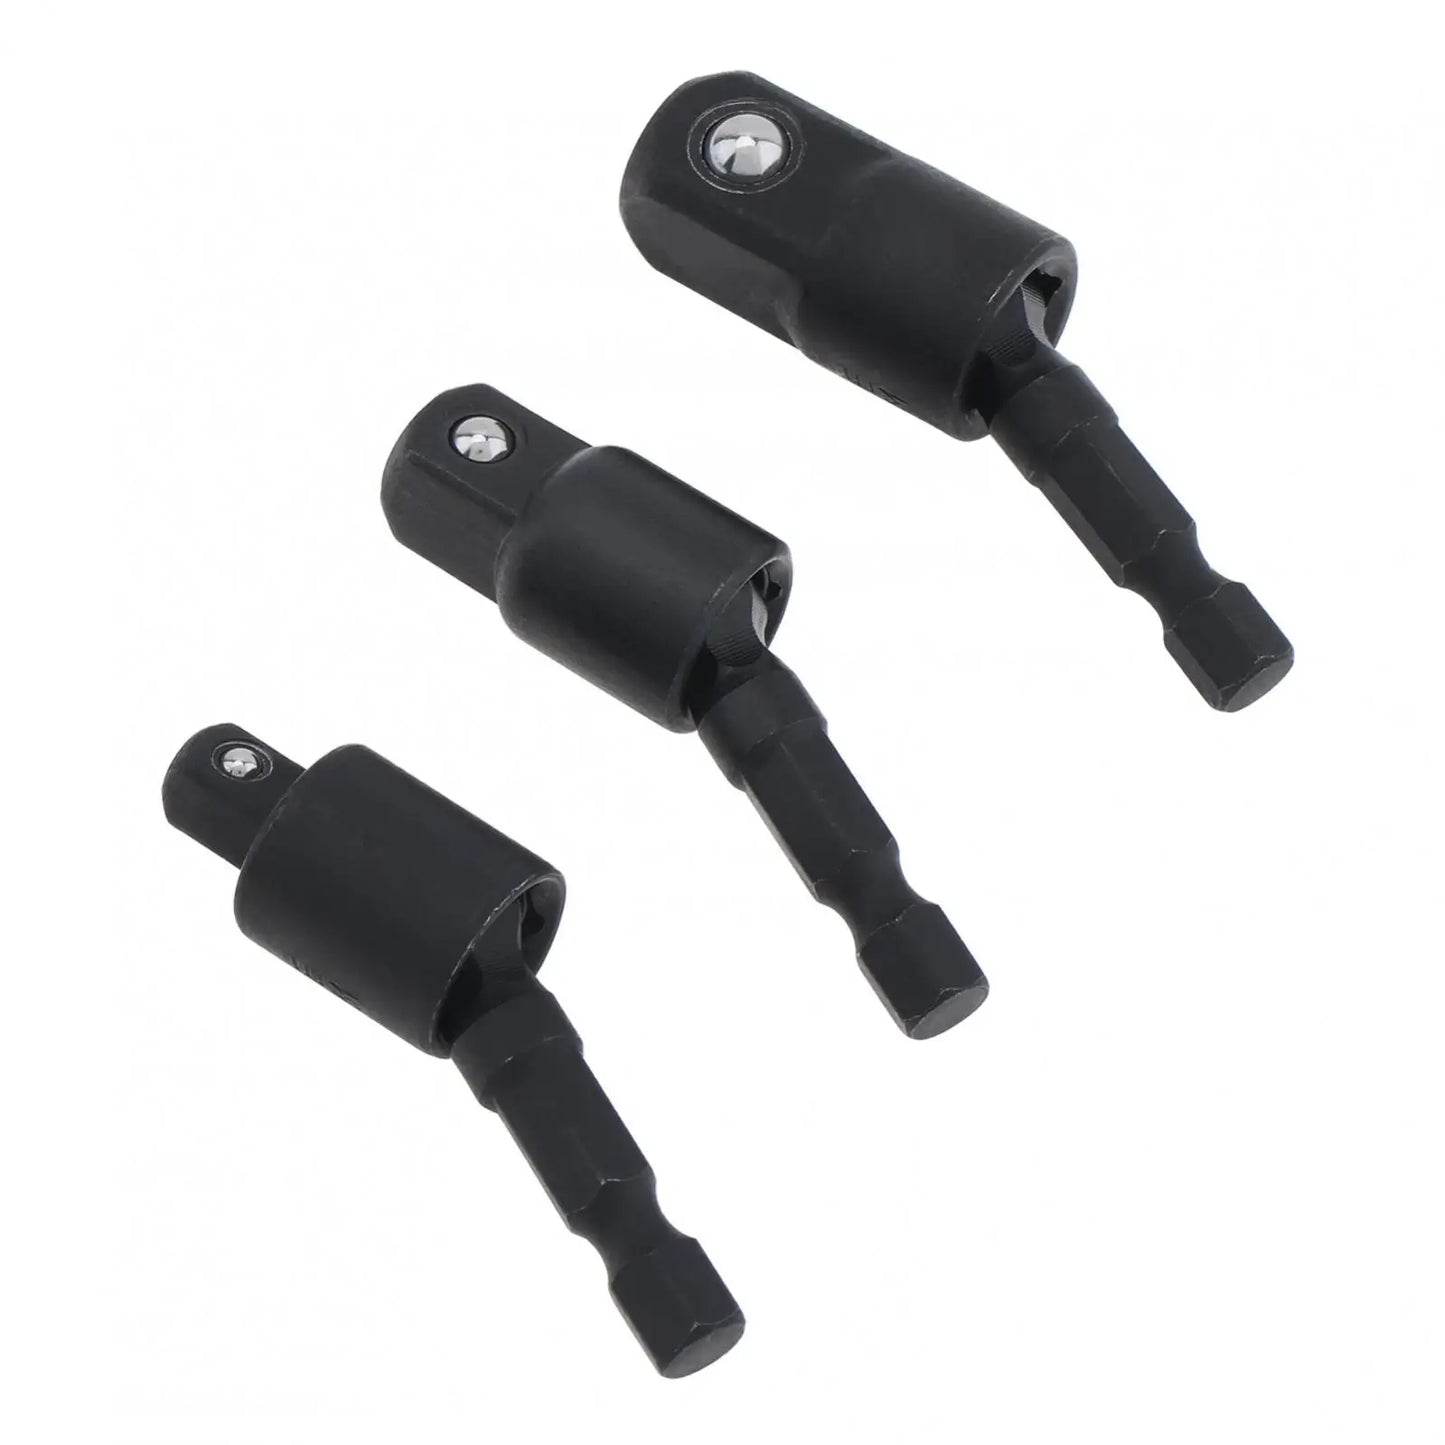 3pcs/set Power Drill Sockets Adapter Sets